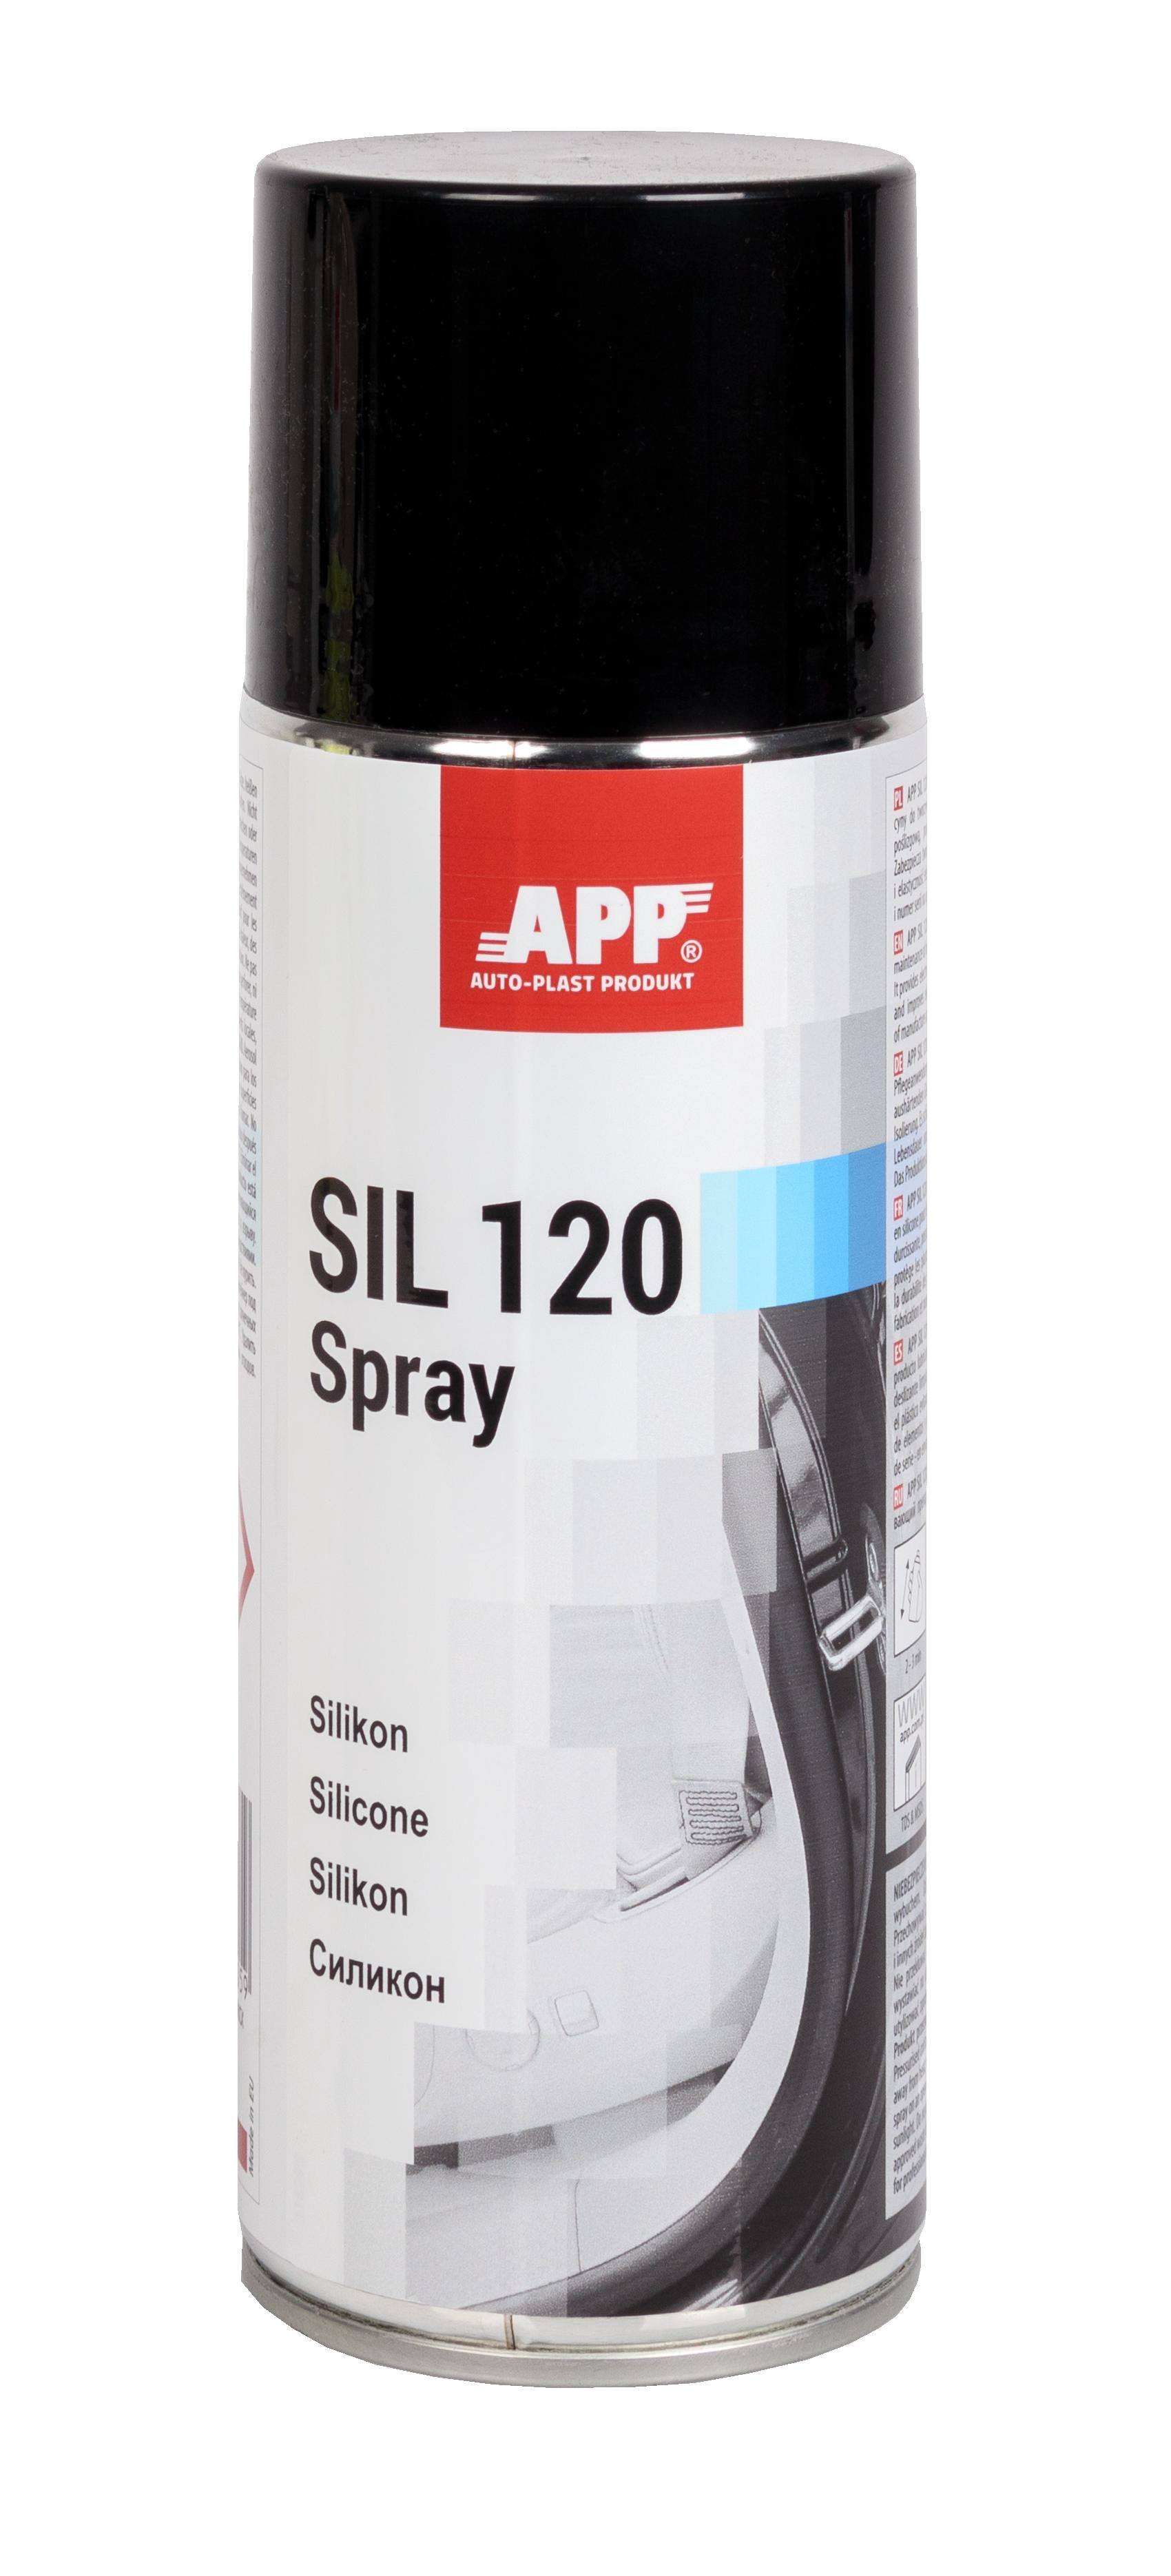 APP 212007 SIL 120 Spray - Silikonspray Siliconspray 400 ml | Sprühdose Gleitspray Spraydose Isolierspray